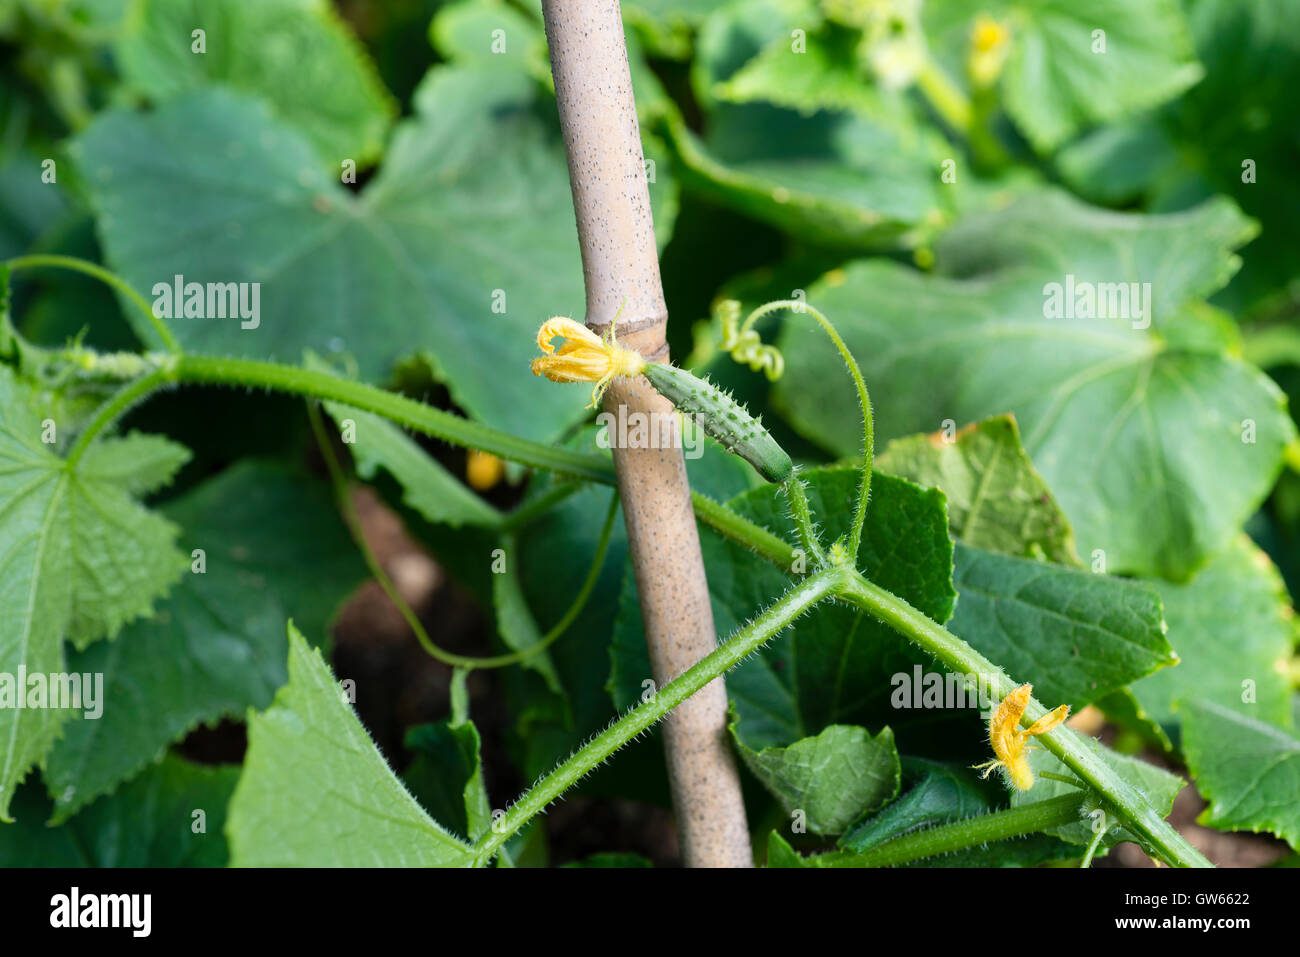 Cucumber marketmore plant (Cucumis sativus) showing new fruit developing. Stock Photo